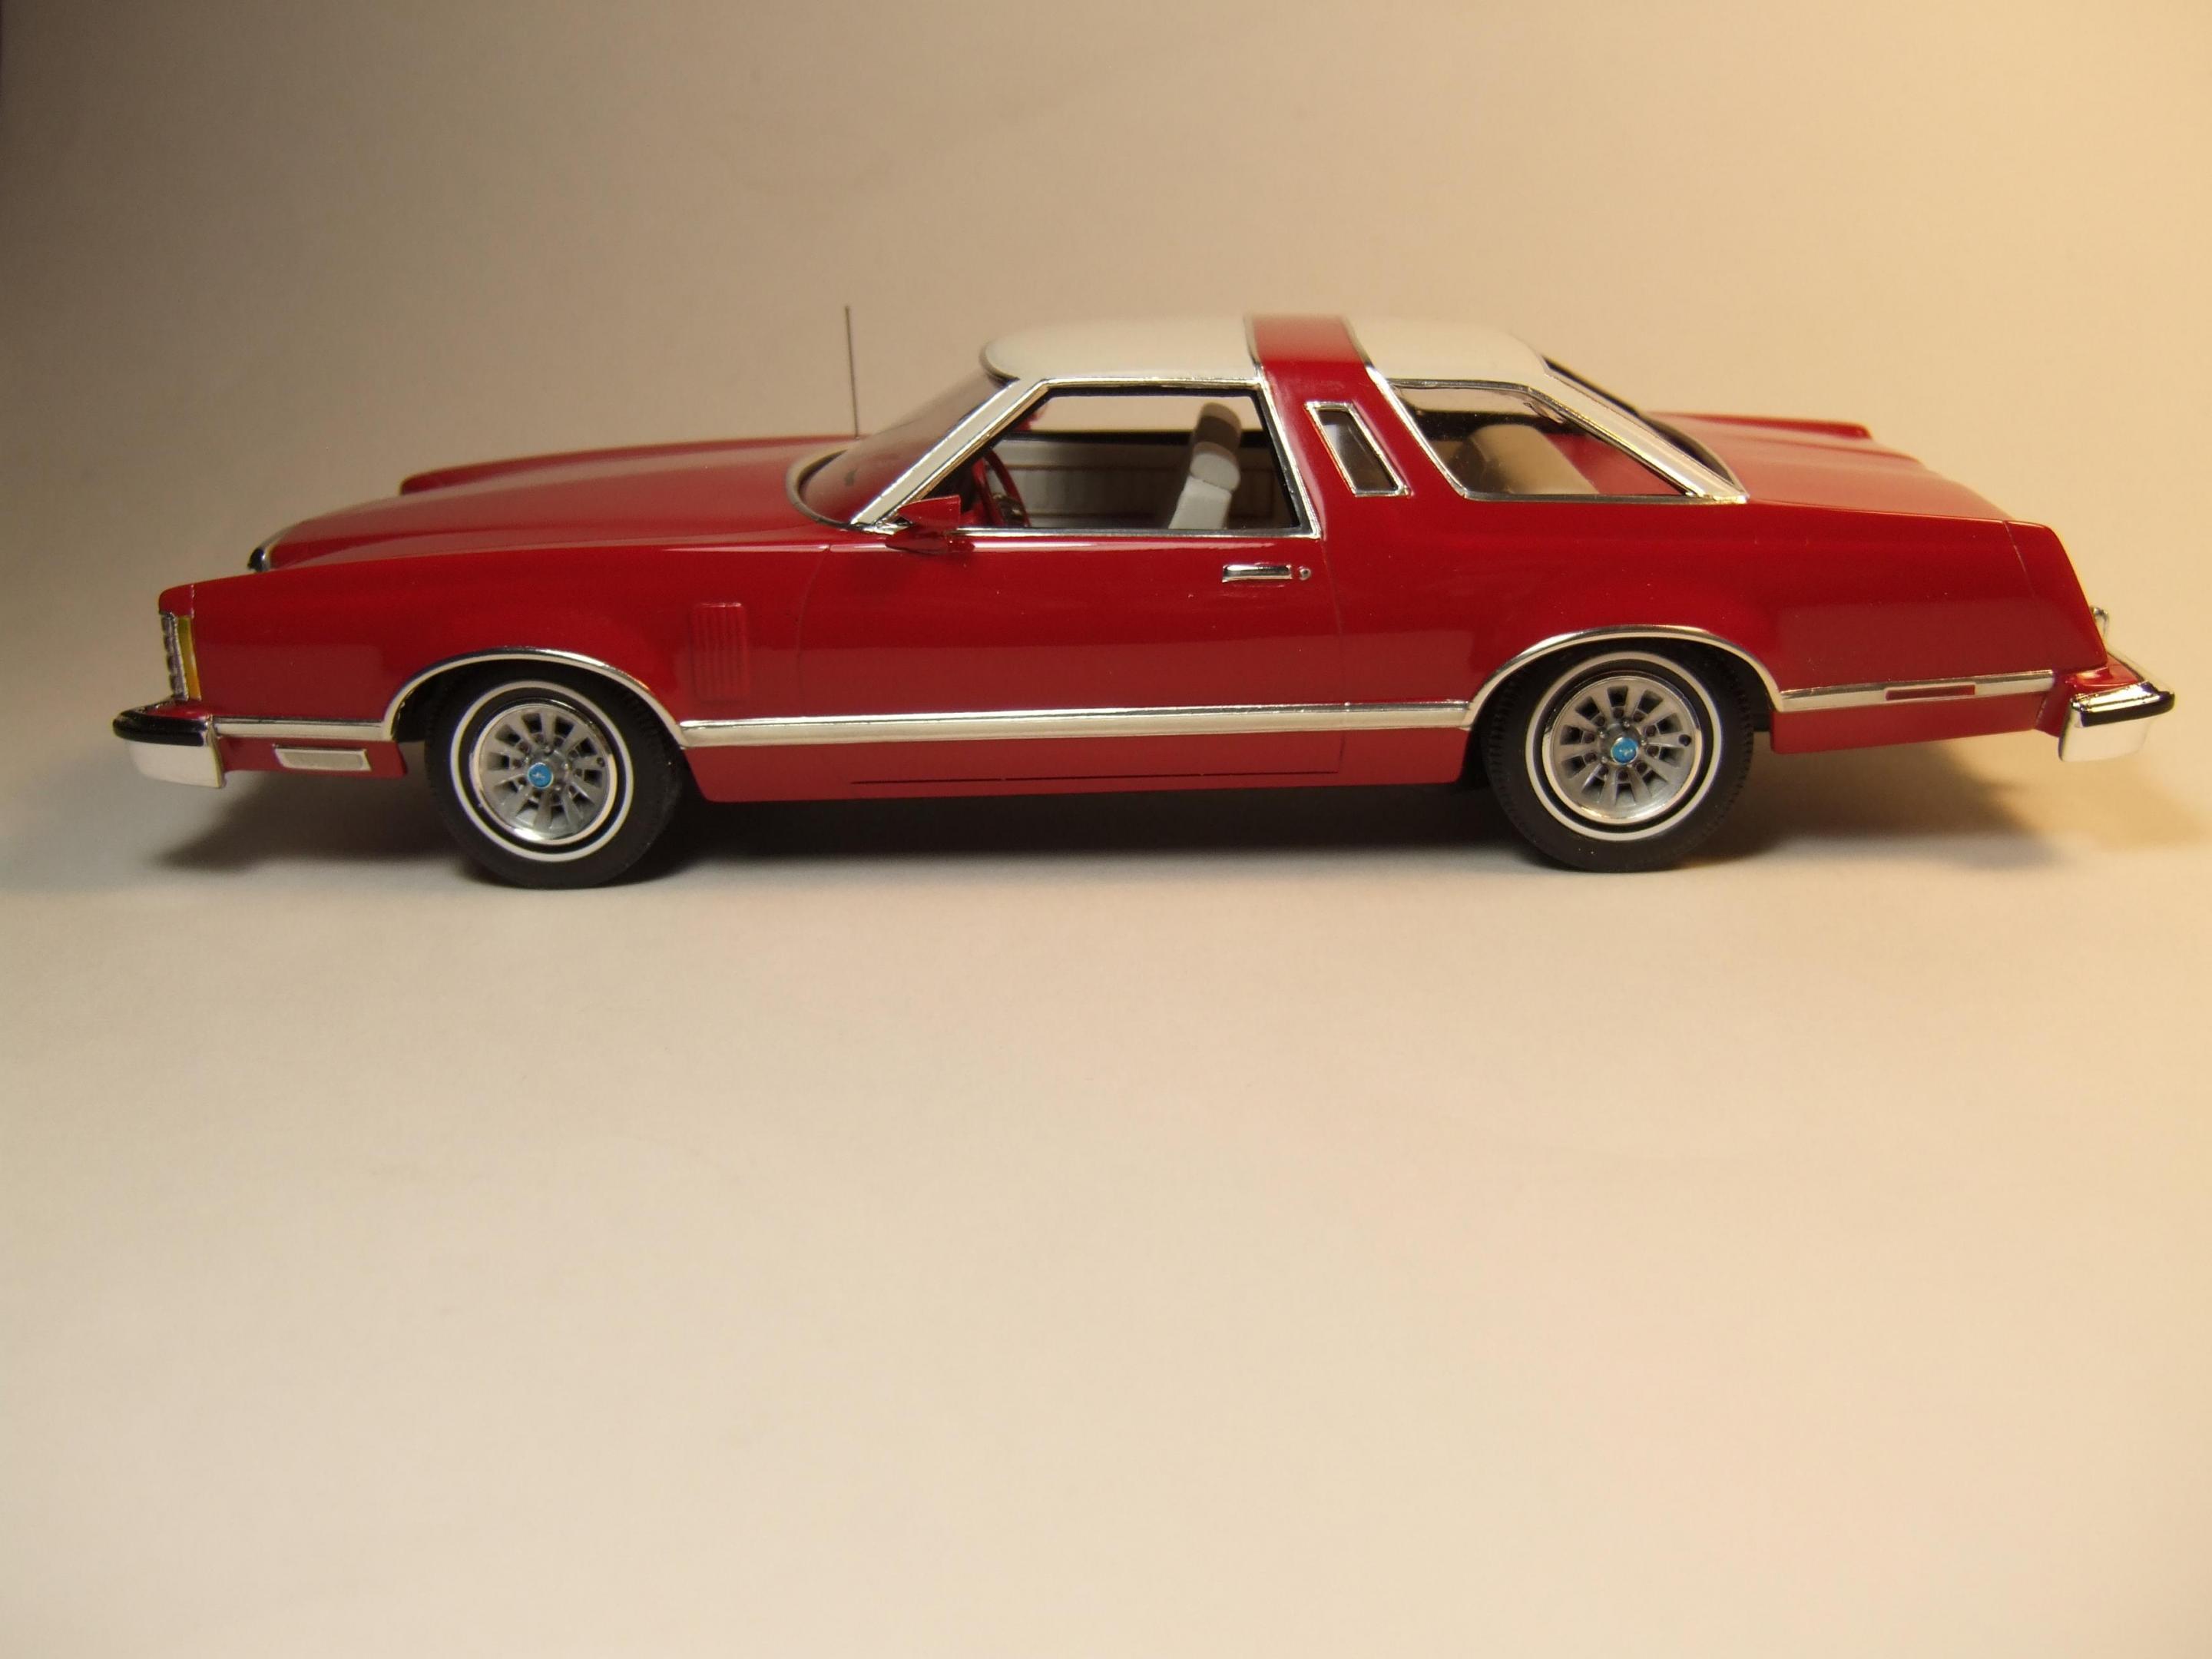 '77 T Bird - Model Cars - Model Cars Magazine Forum